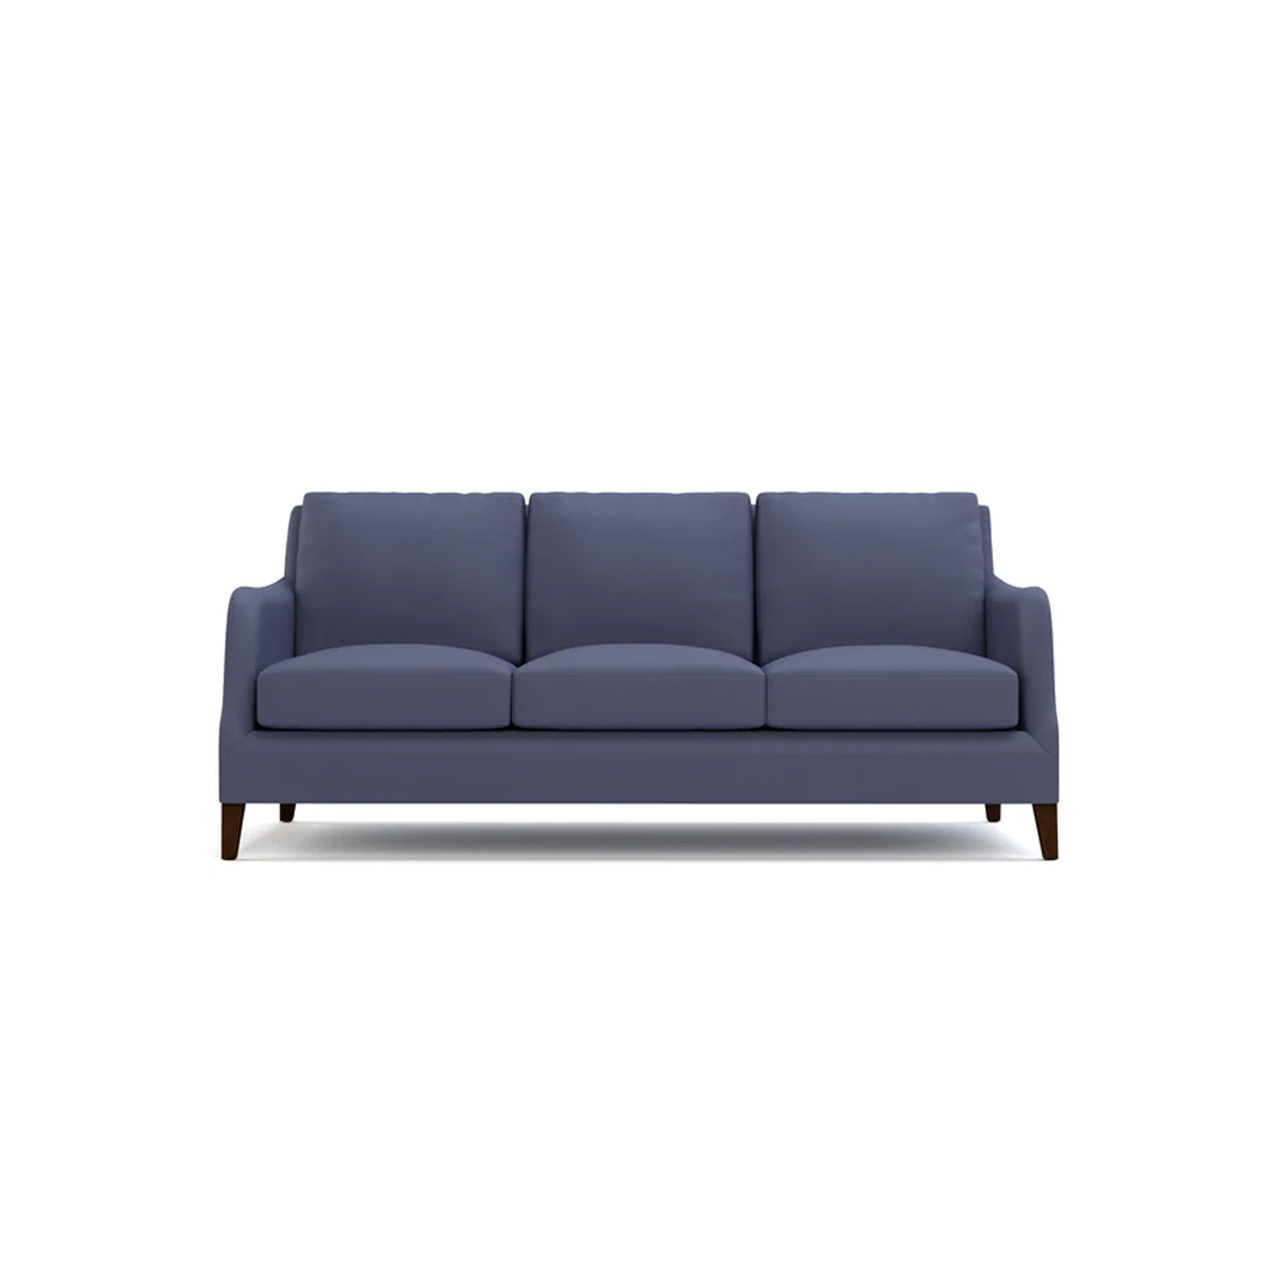 Harper sofa